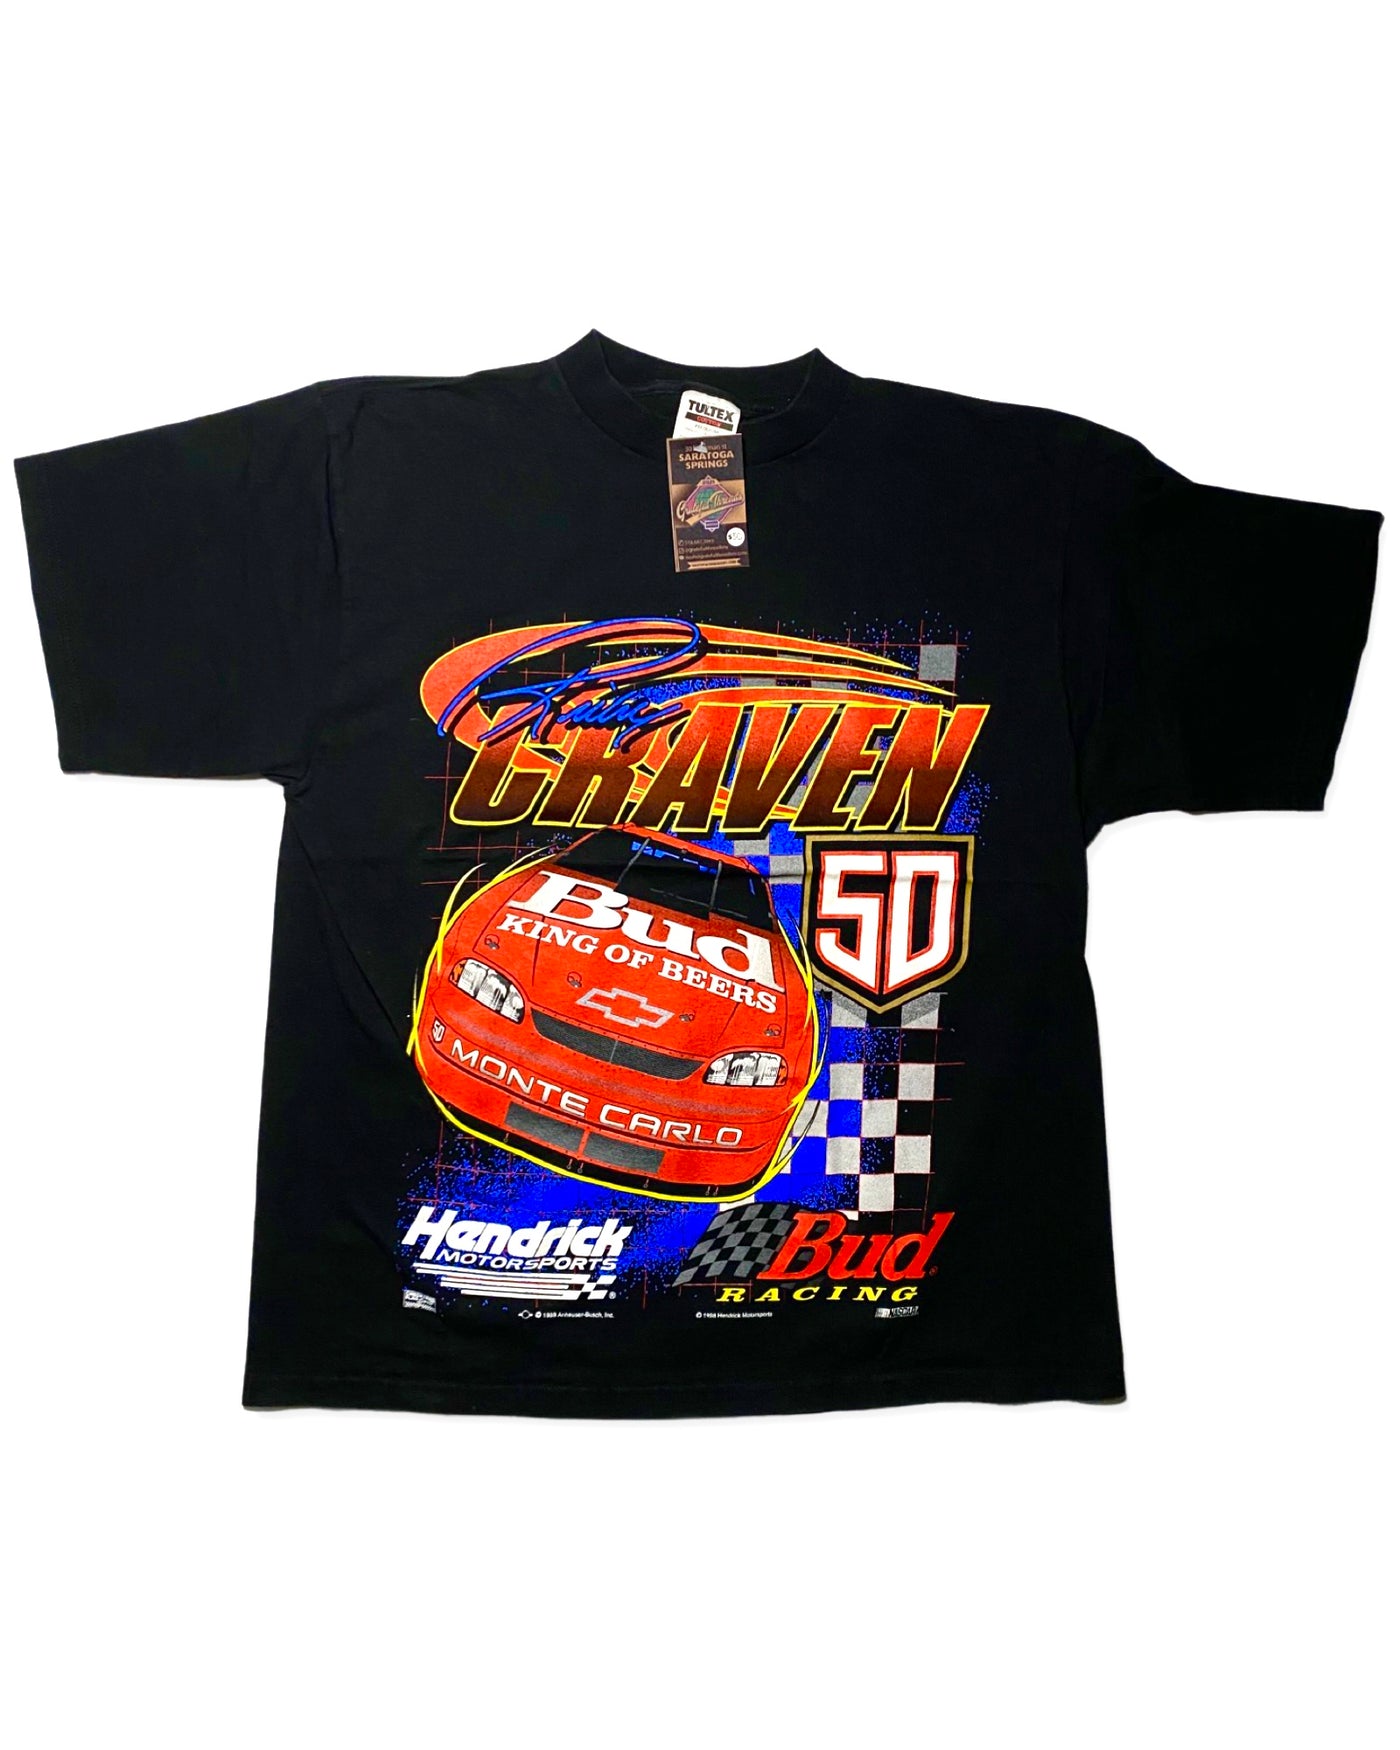 Vintage 1998 Ricky Craven Bud Racing T-Shirt